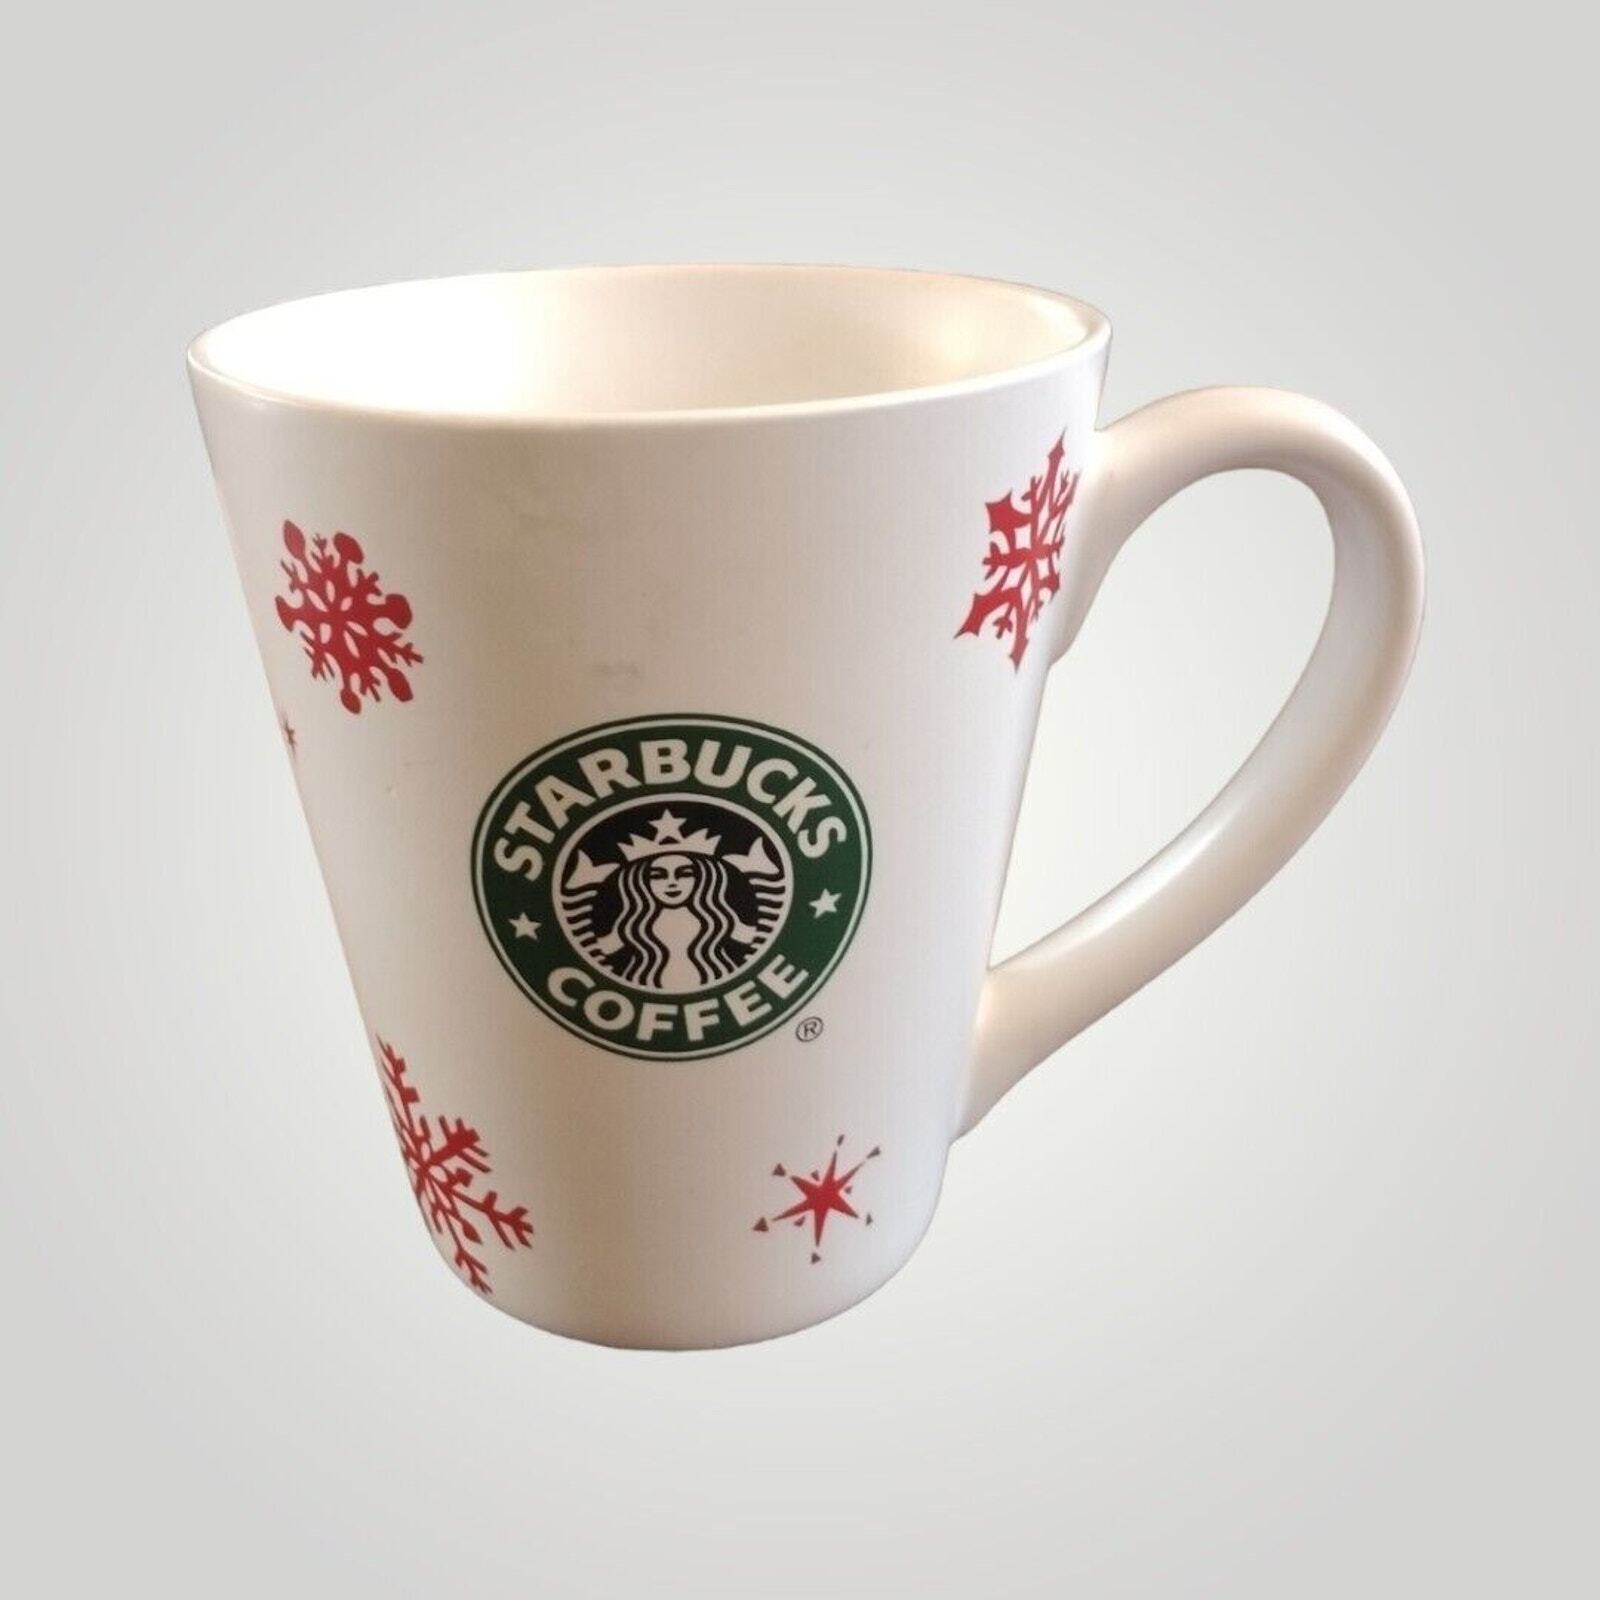 2010 Starbucks Christmas Coffee Mug White W/ Snowflakes